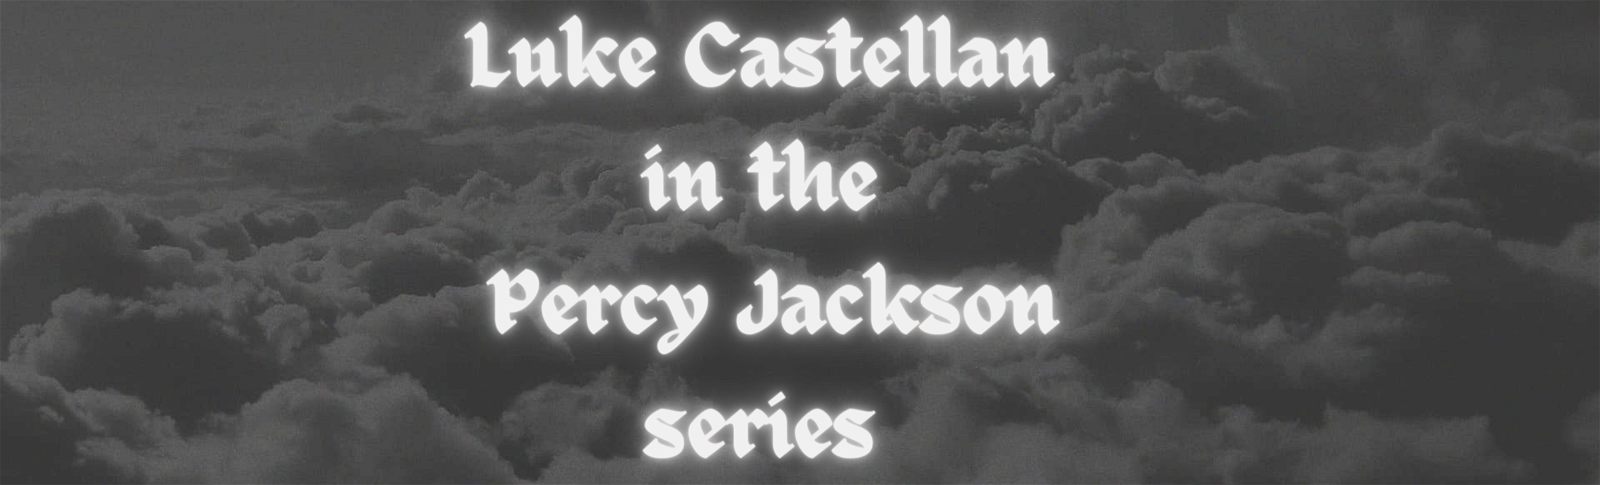 Luke Castellan in the Percy Jackson Series